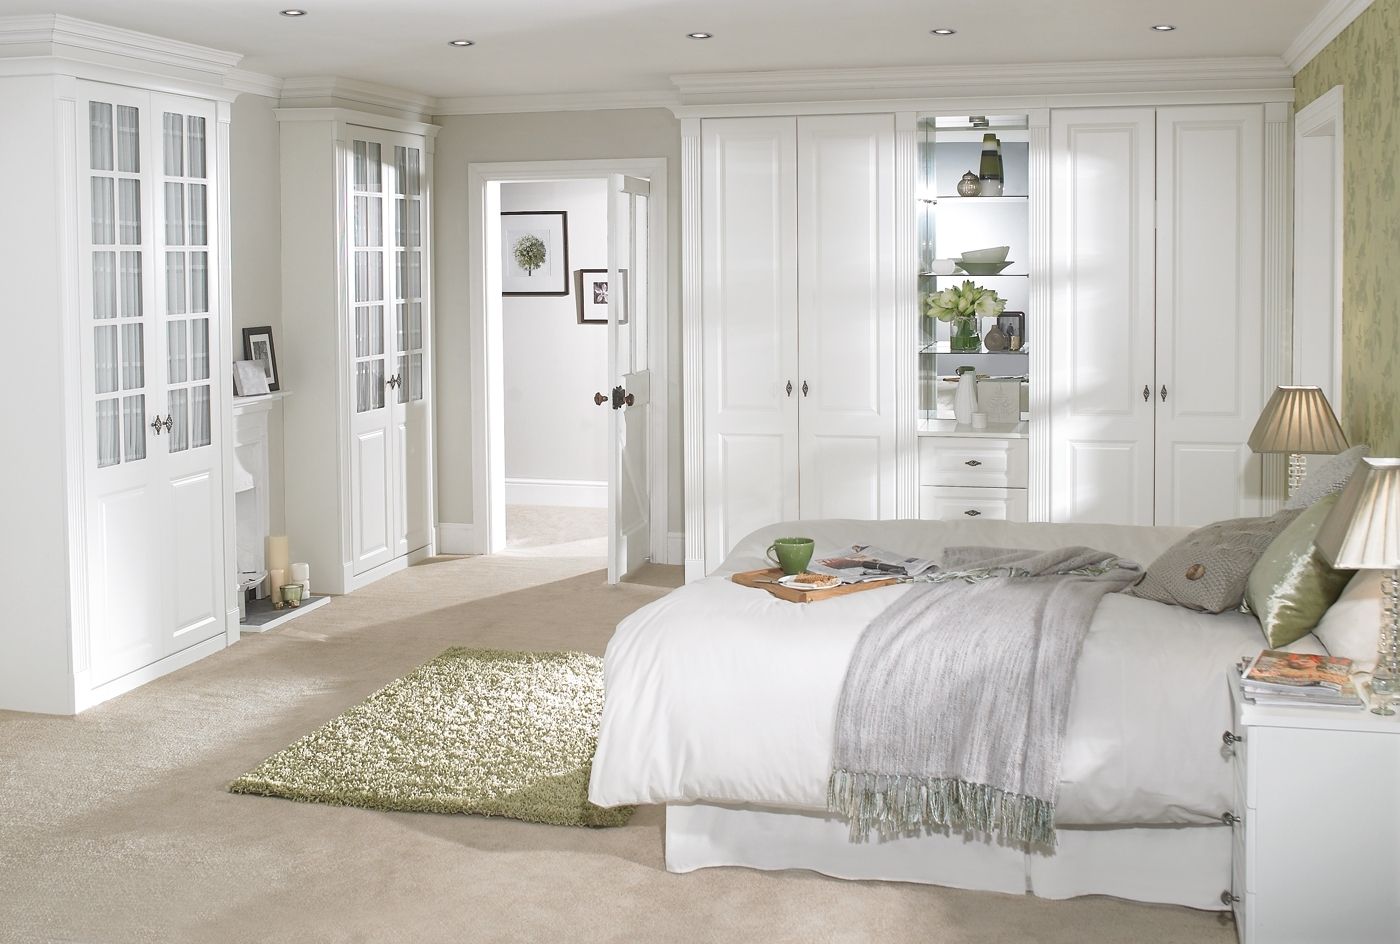 2018 Ikea White Bedroom Furniture Design Ideas : Decorating With Ikea With White Bedroom Wardrobes (View 11 of 15)